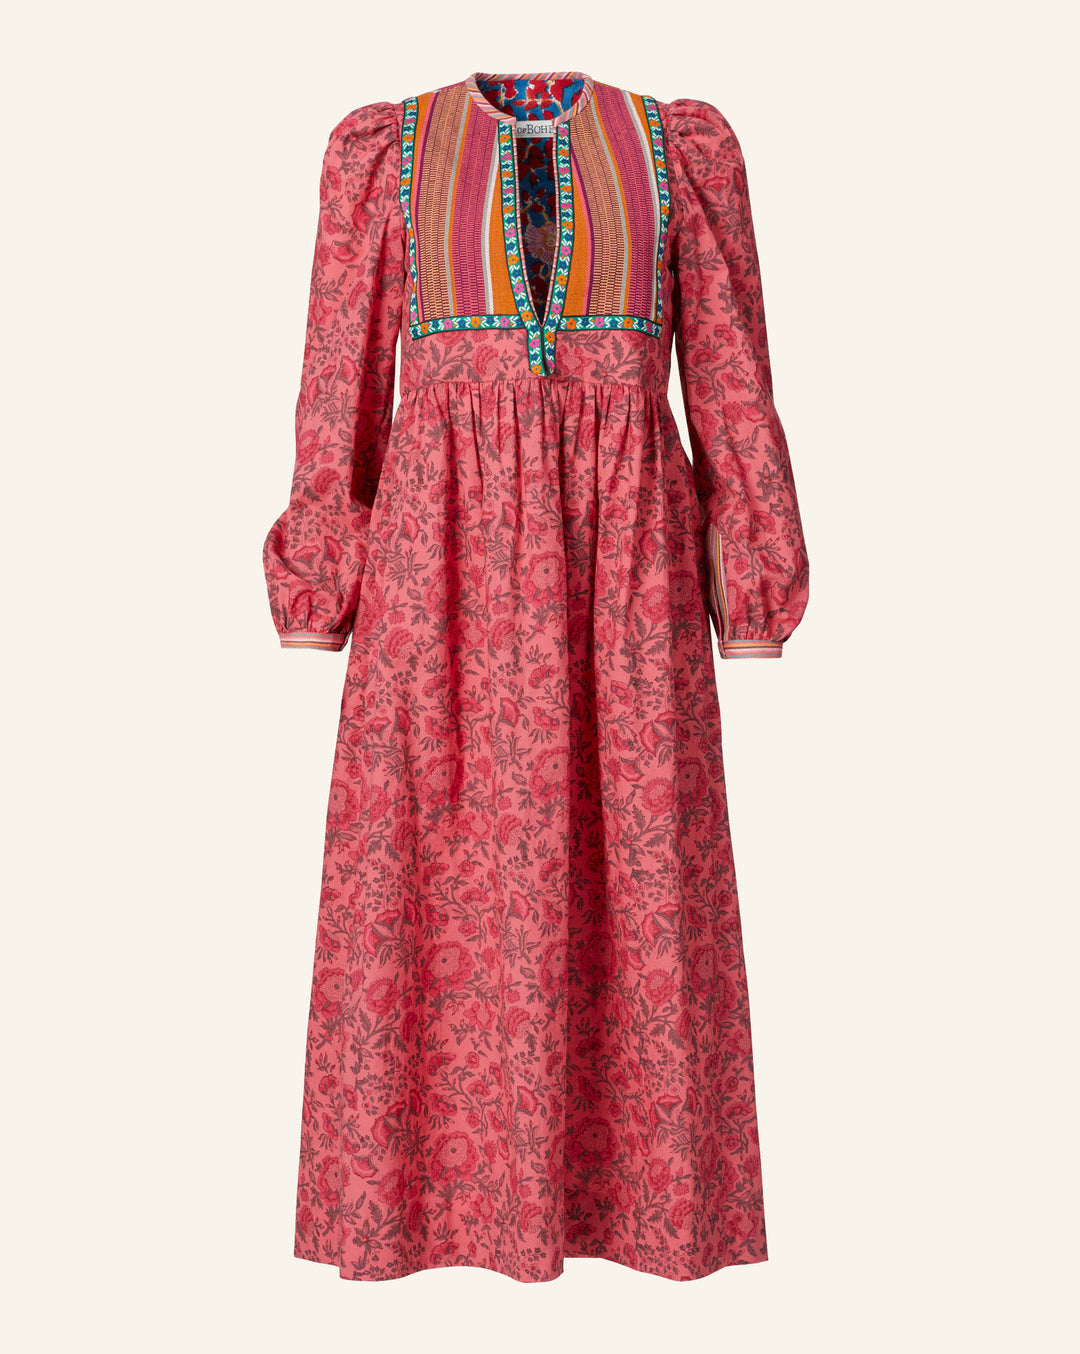 Winifred Raspberry Dress